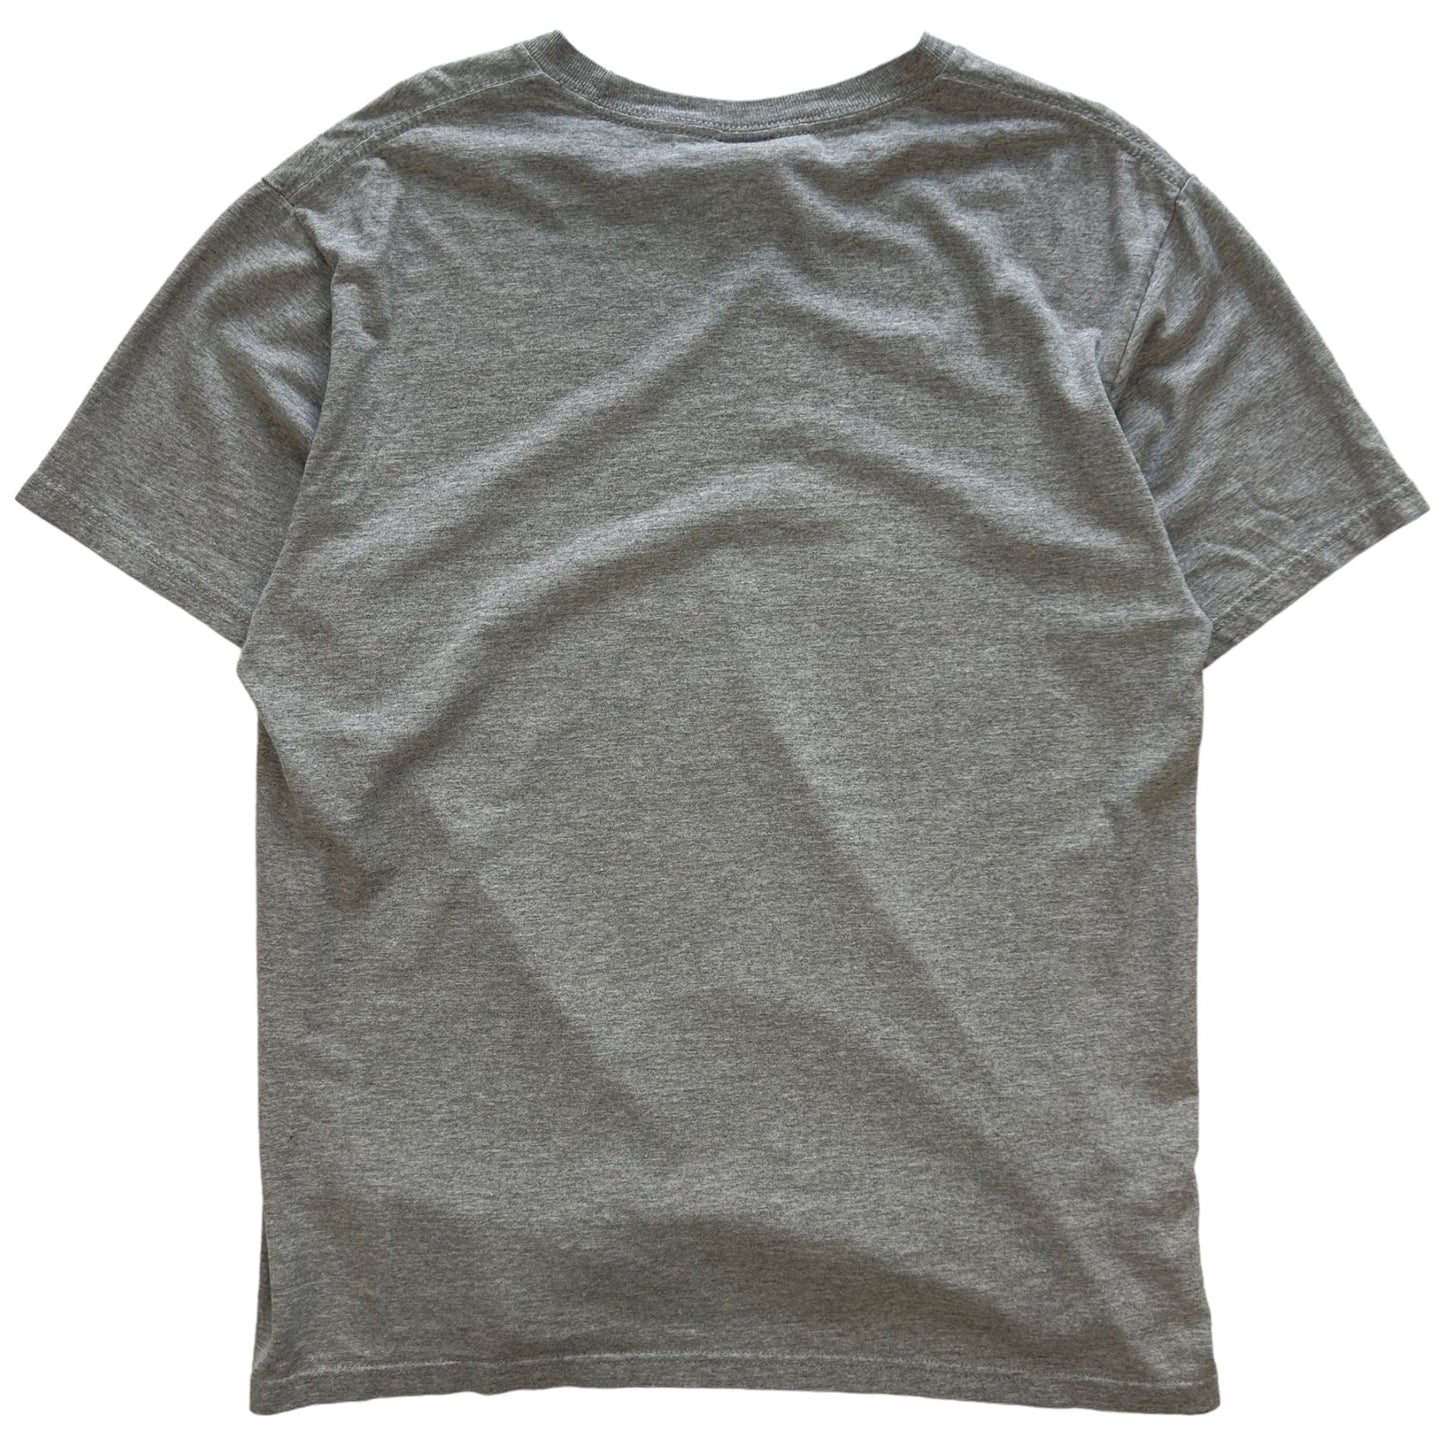 Stussy Graphic T Shirt Size M